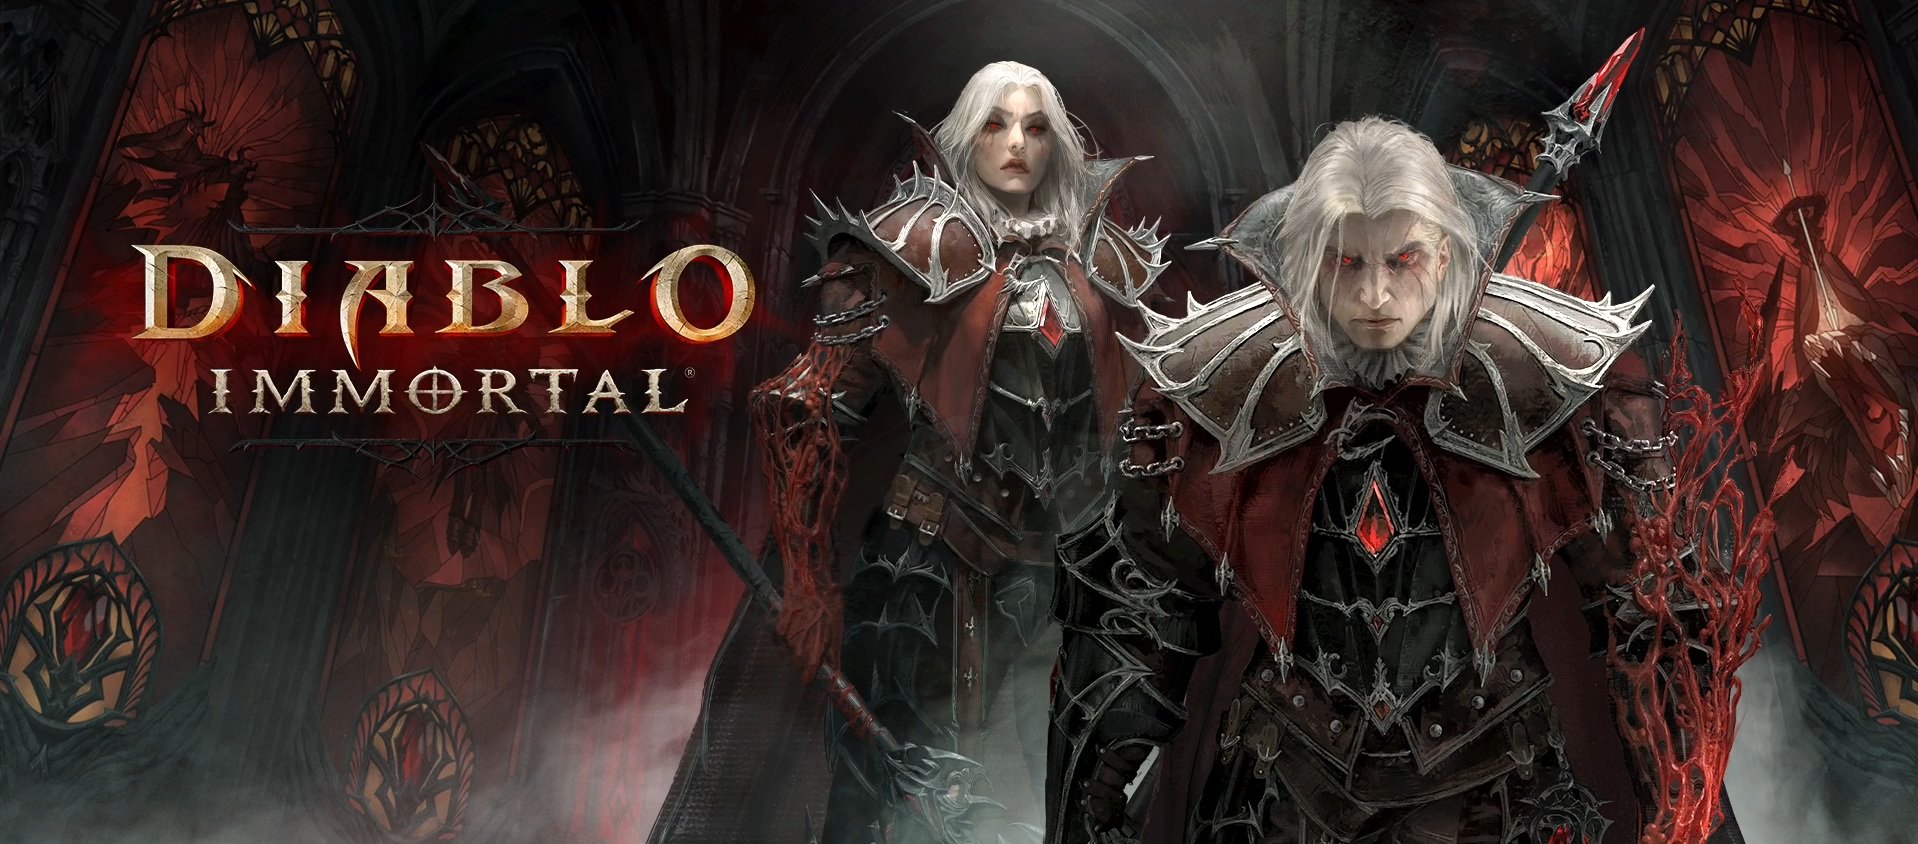 Diablo Immortal Guides, Legendary Gems, Builds, News, Patch Notes